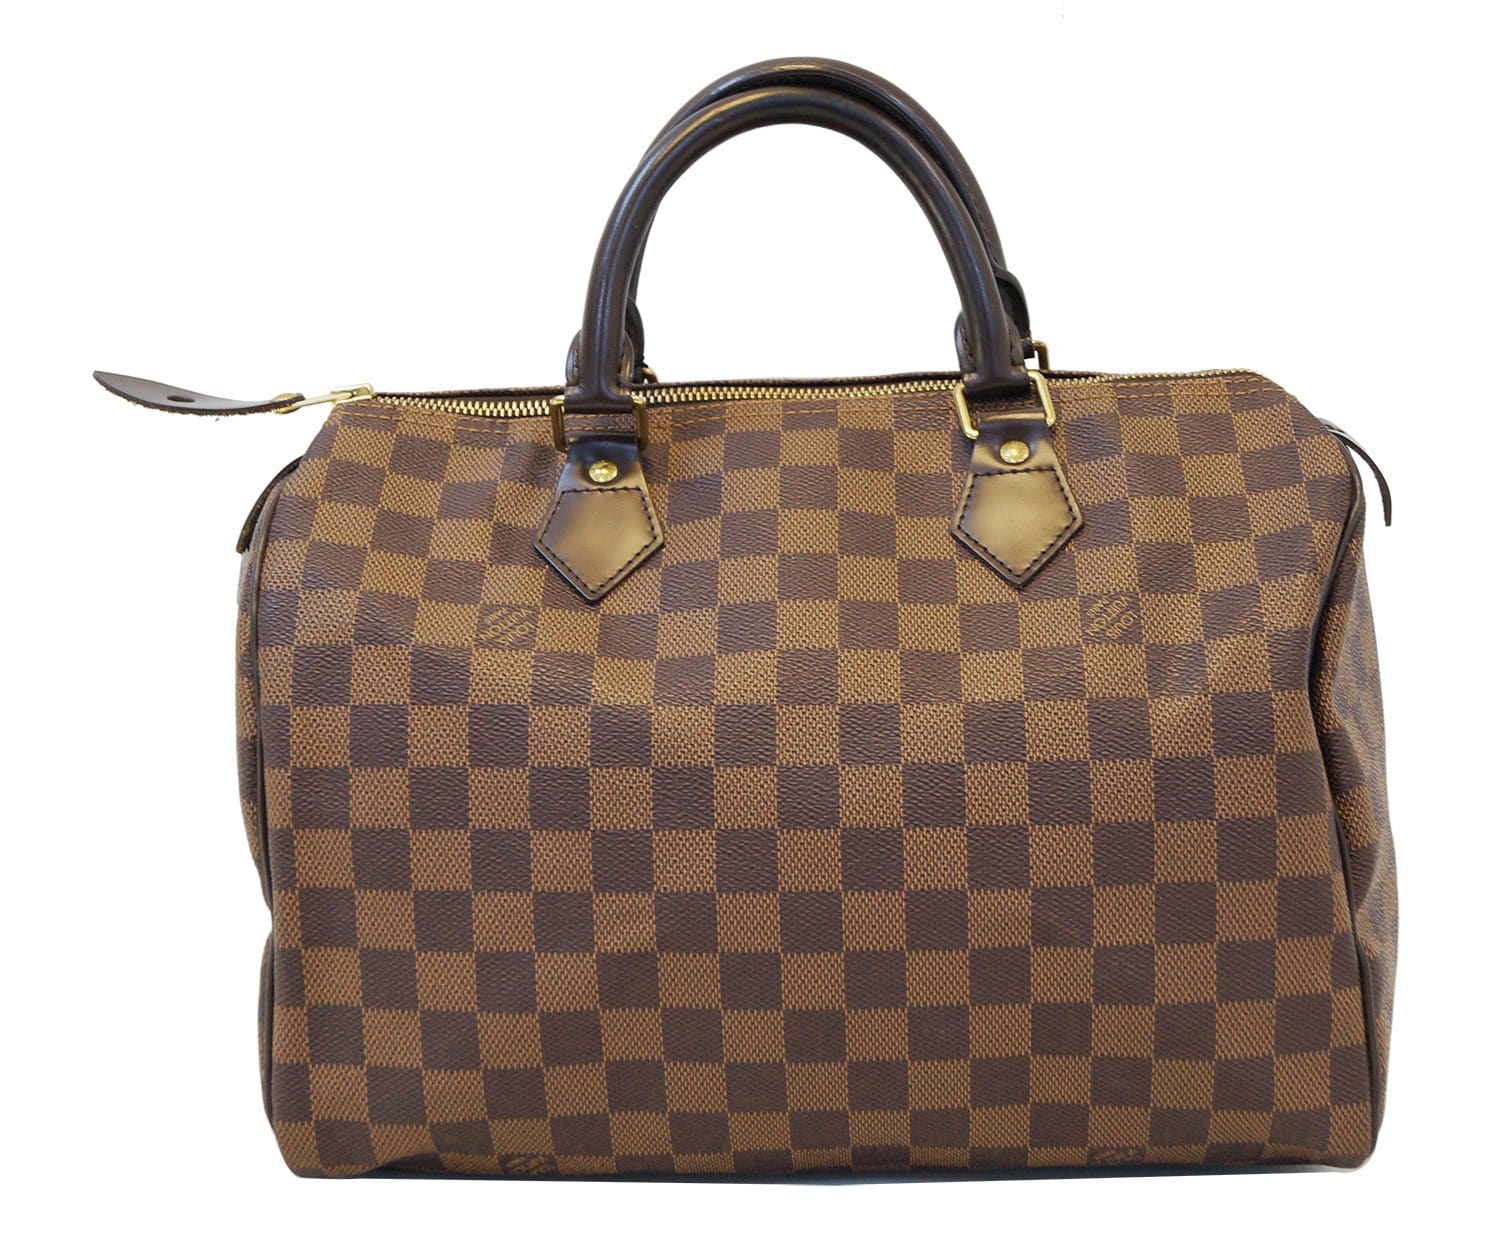 Authentic Louis Vuitton Damier Ebene Speedy 30 Handbag E2884